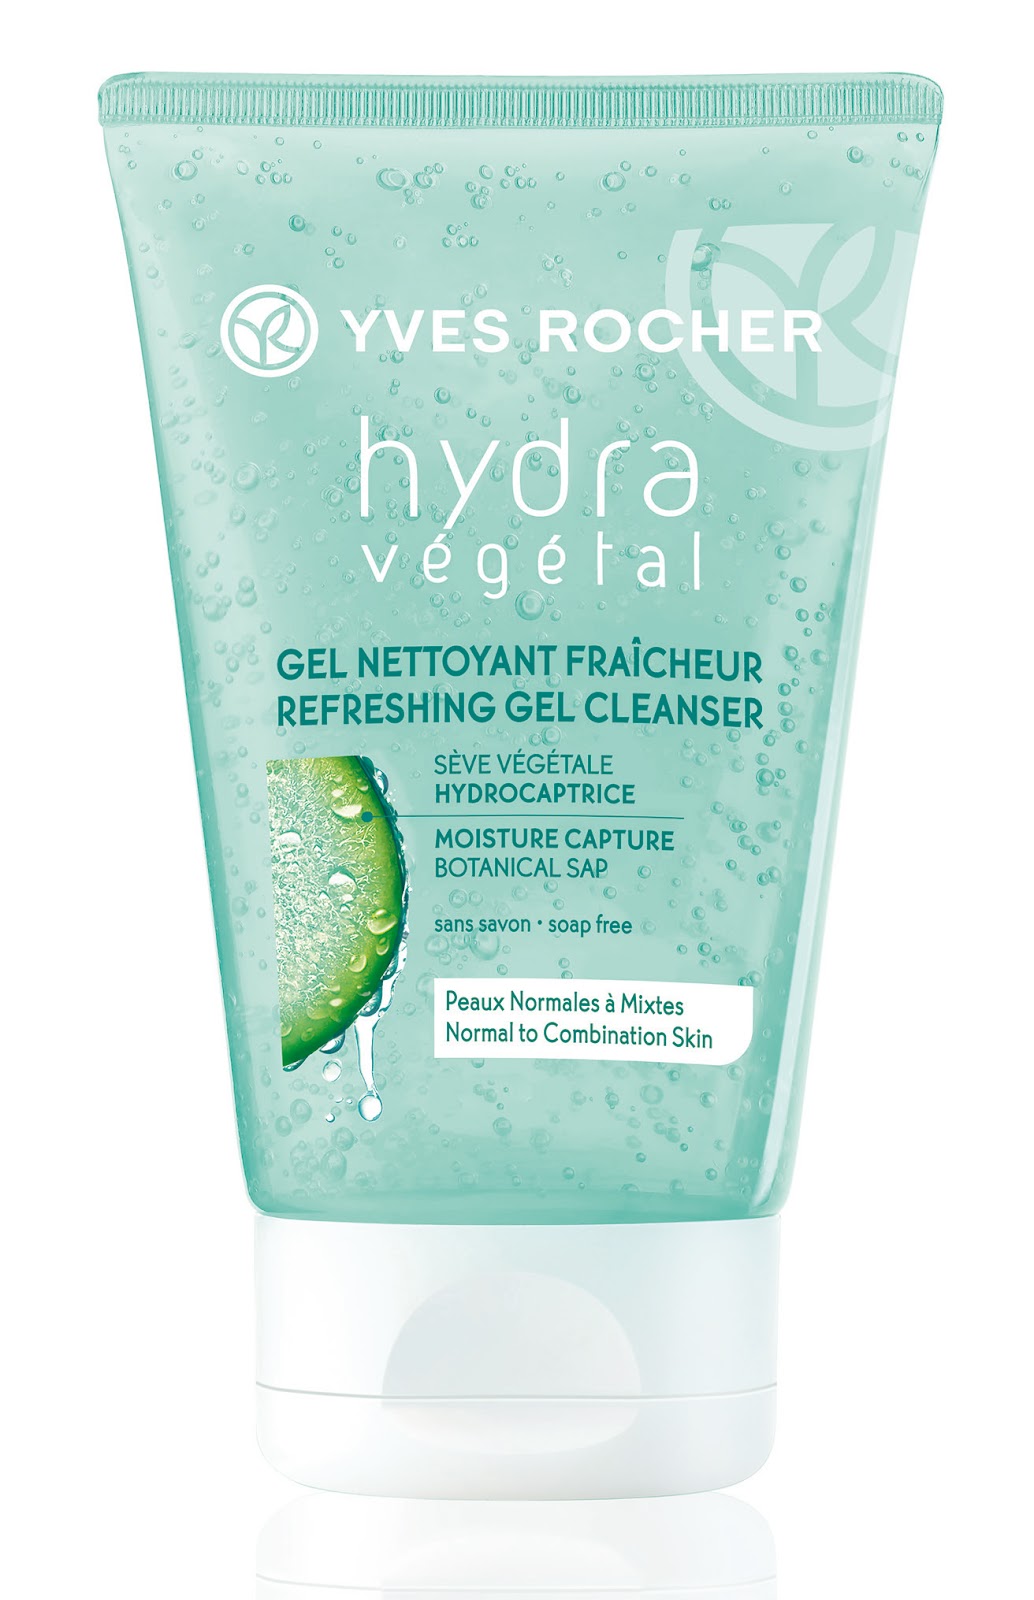 Refreshing gel. Hydra vegetal Yves Rocher гель nettoyant. Yves Rocher Cleansing Gel. Ив Роше пенка для умывания. Gel nettoyant / очищающий гель для лица.